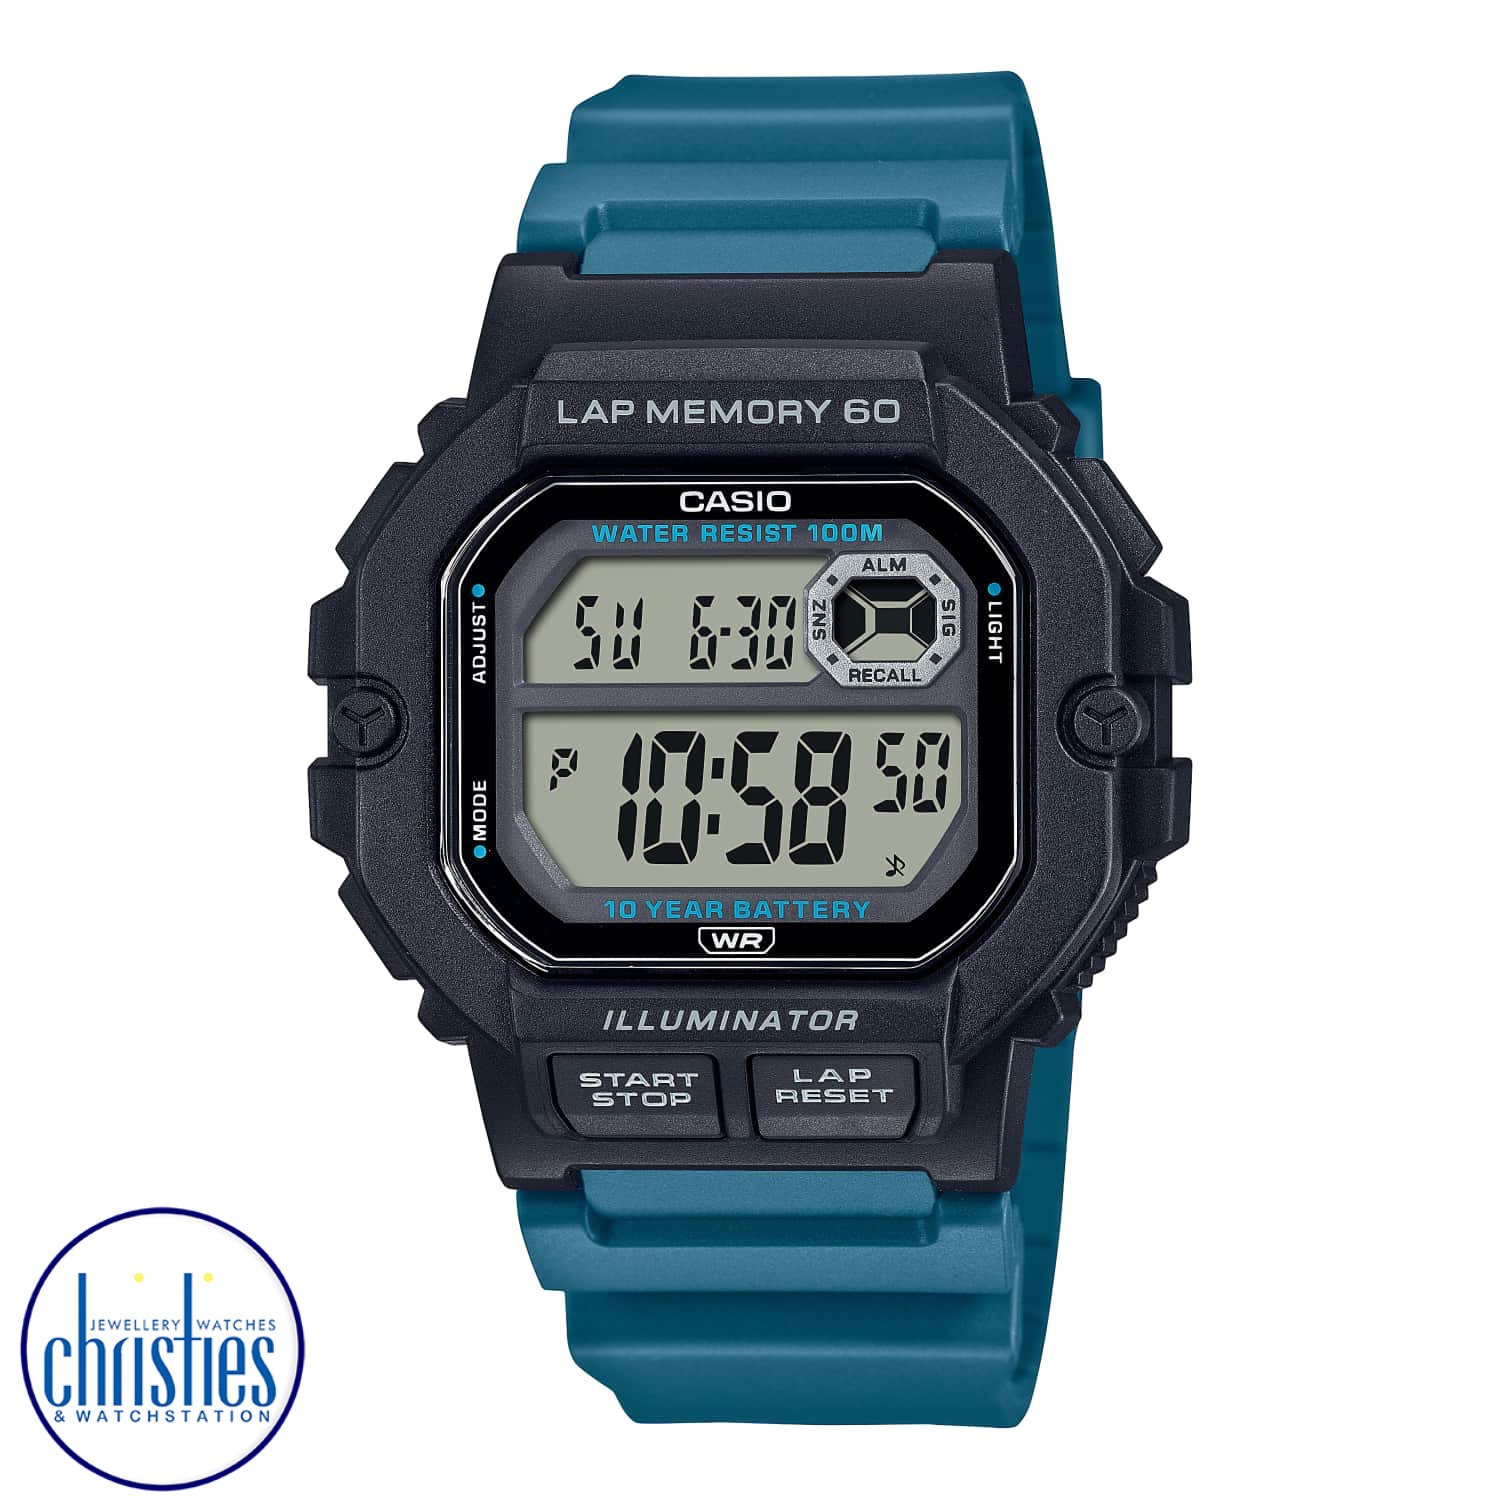 WS1400H-3A Casio 60 Lap Memory Sports Watch cheap casio watches nz